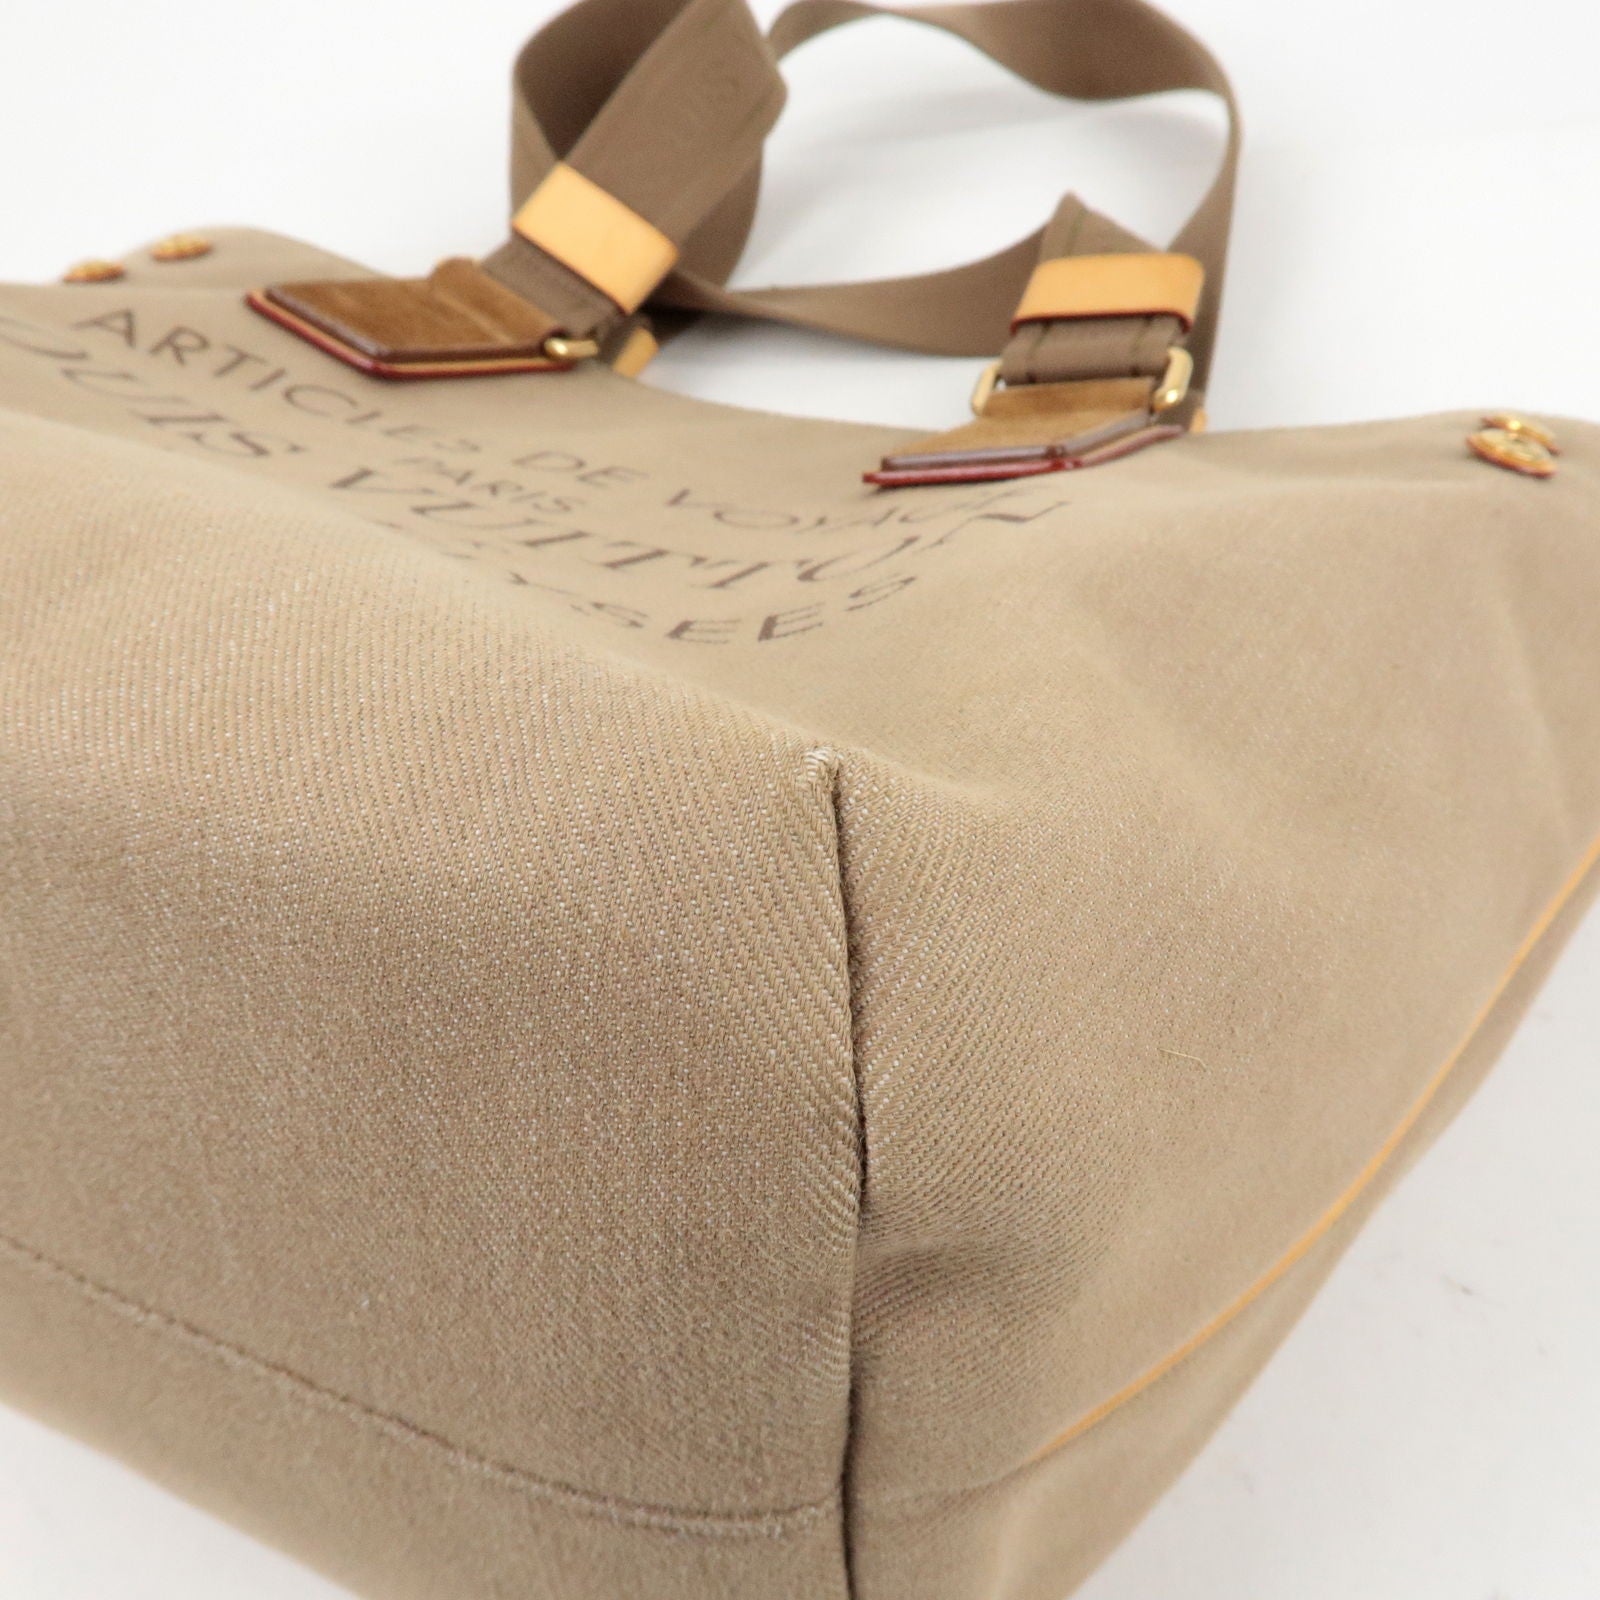 LOUIS VUITTON Authentic Pre Owned Cosmetic bag Trousse Demi